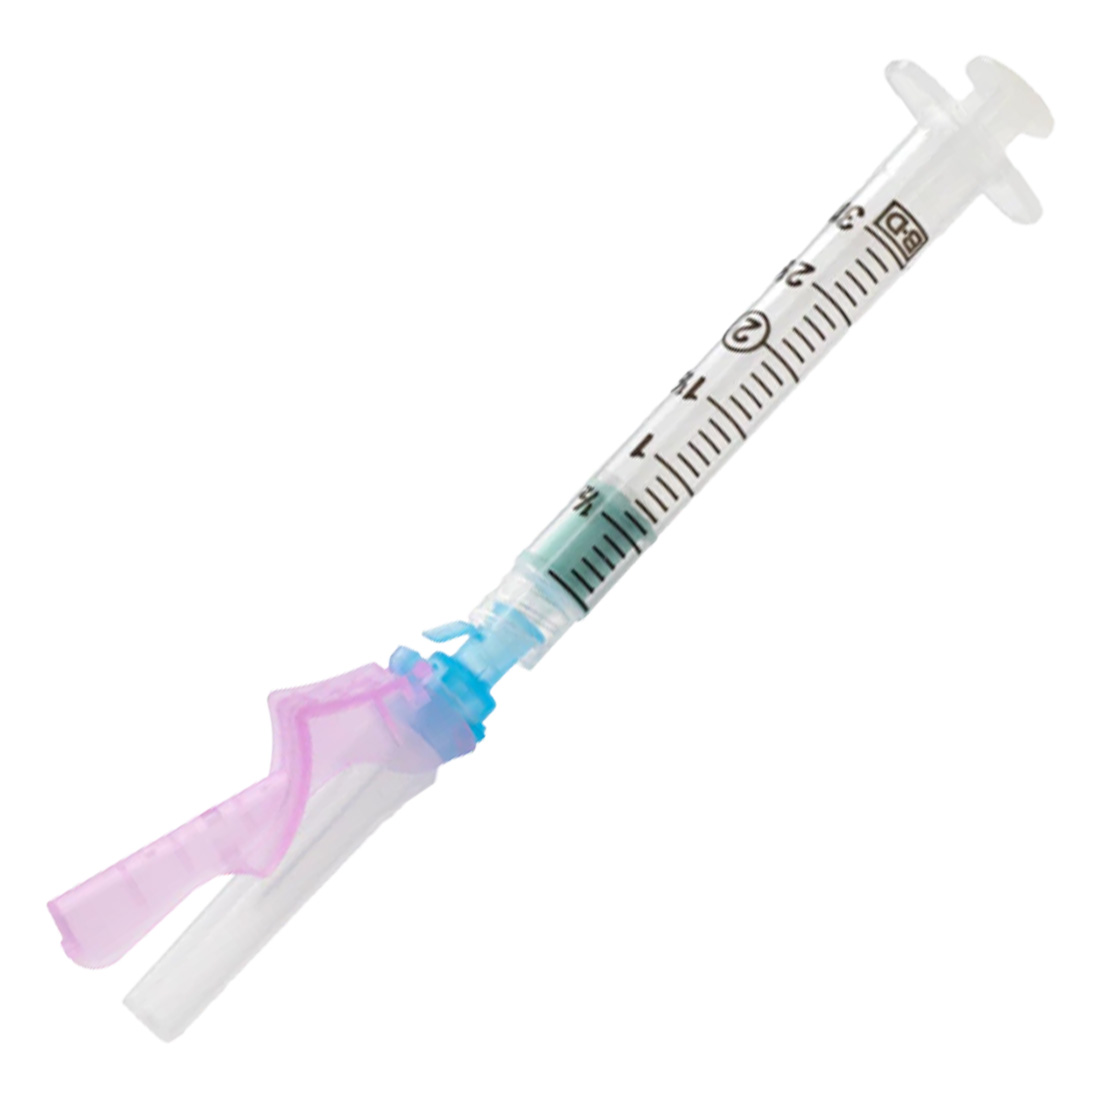 3 cc BD Luer-Lok™ Syringe w/21ga x 1" BD Eclipse™ Needle, Green Hub - 50/Box